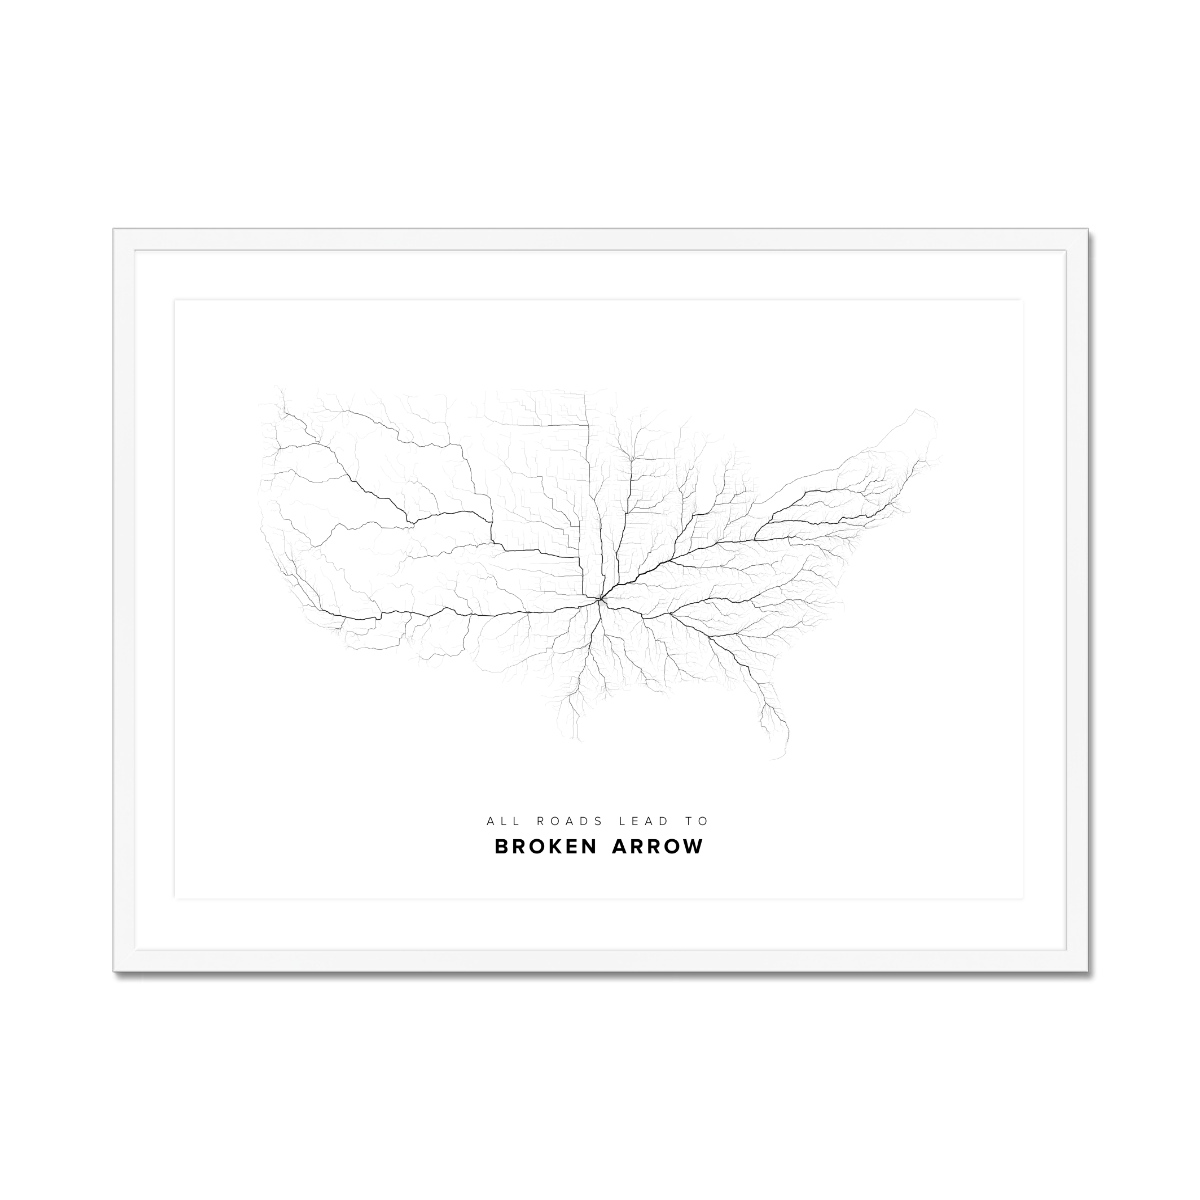 All roads lead to Broken Arrow (United States of America) Fine Art Map Print